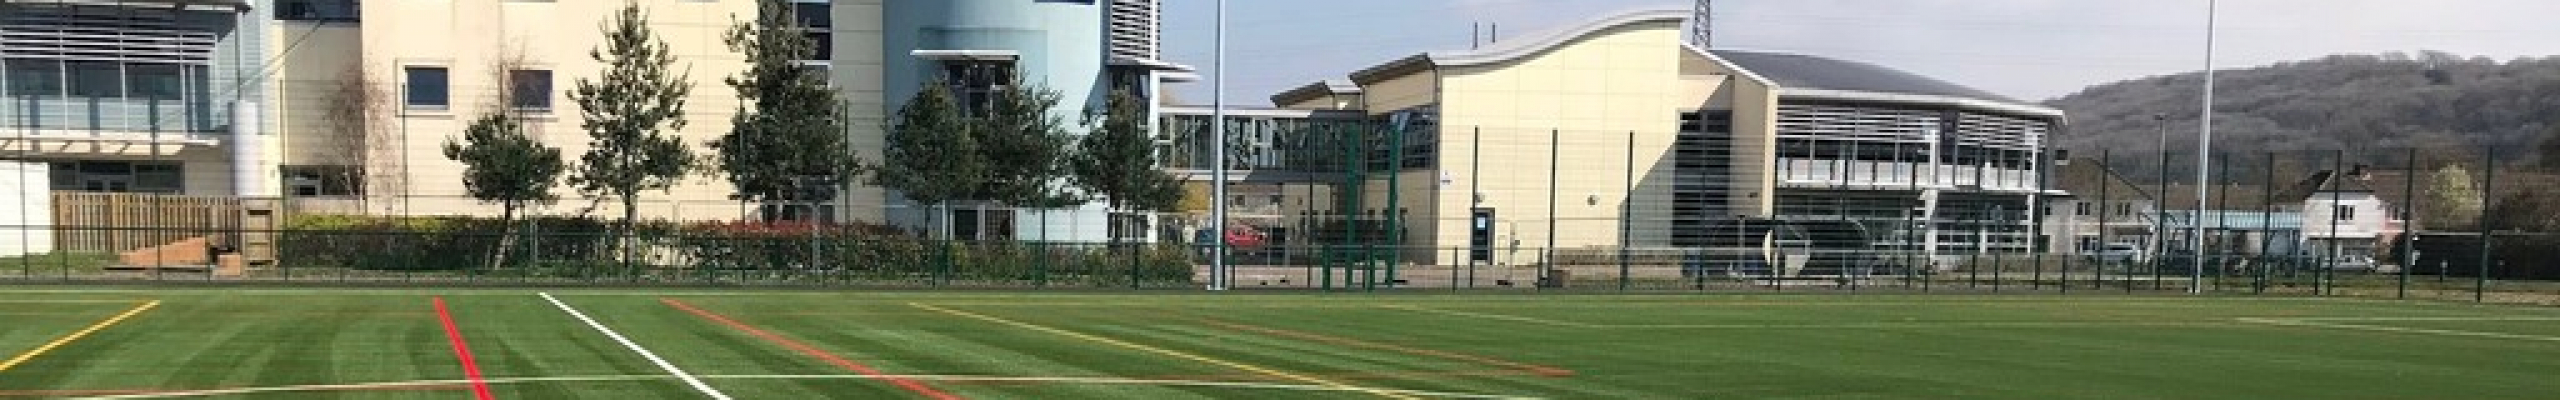 Loxton Campus Sports Field